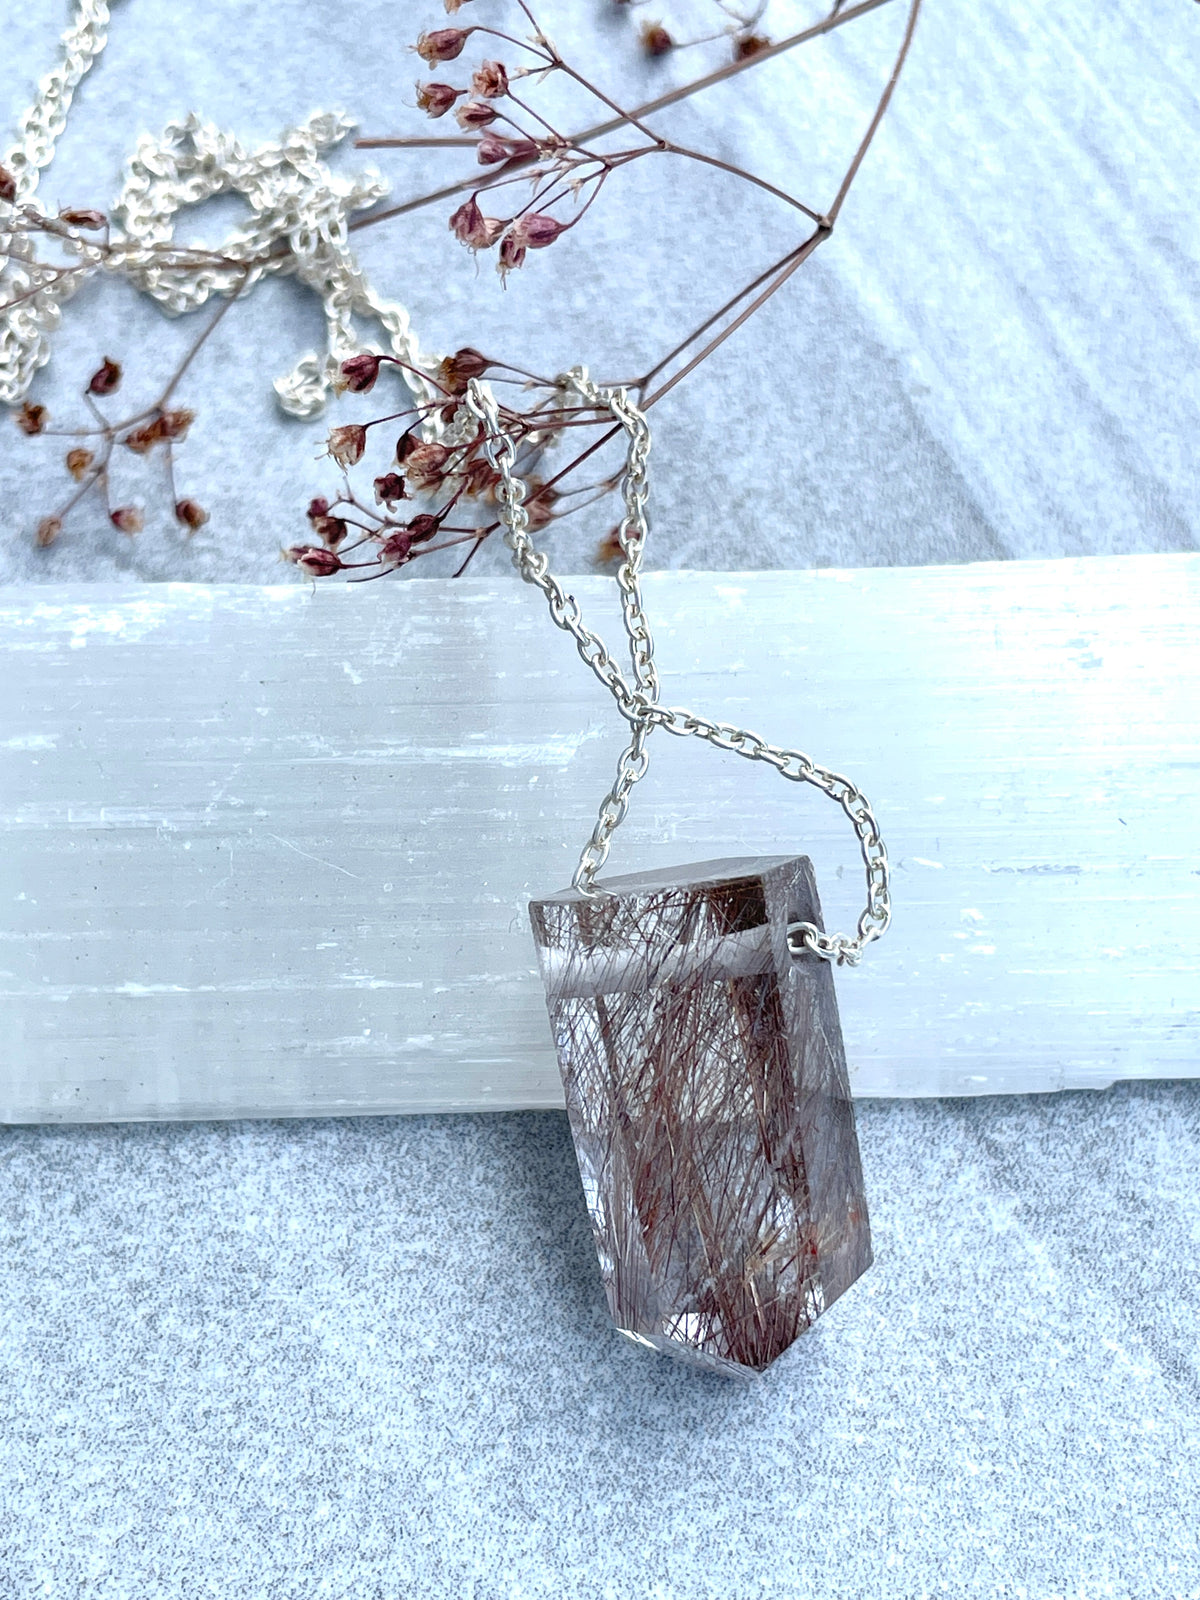 Rutilated quartz crystal point necklace necklace Amanda K Lockrow